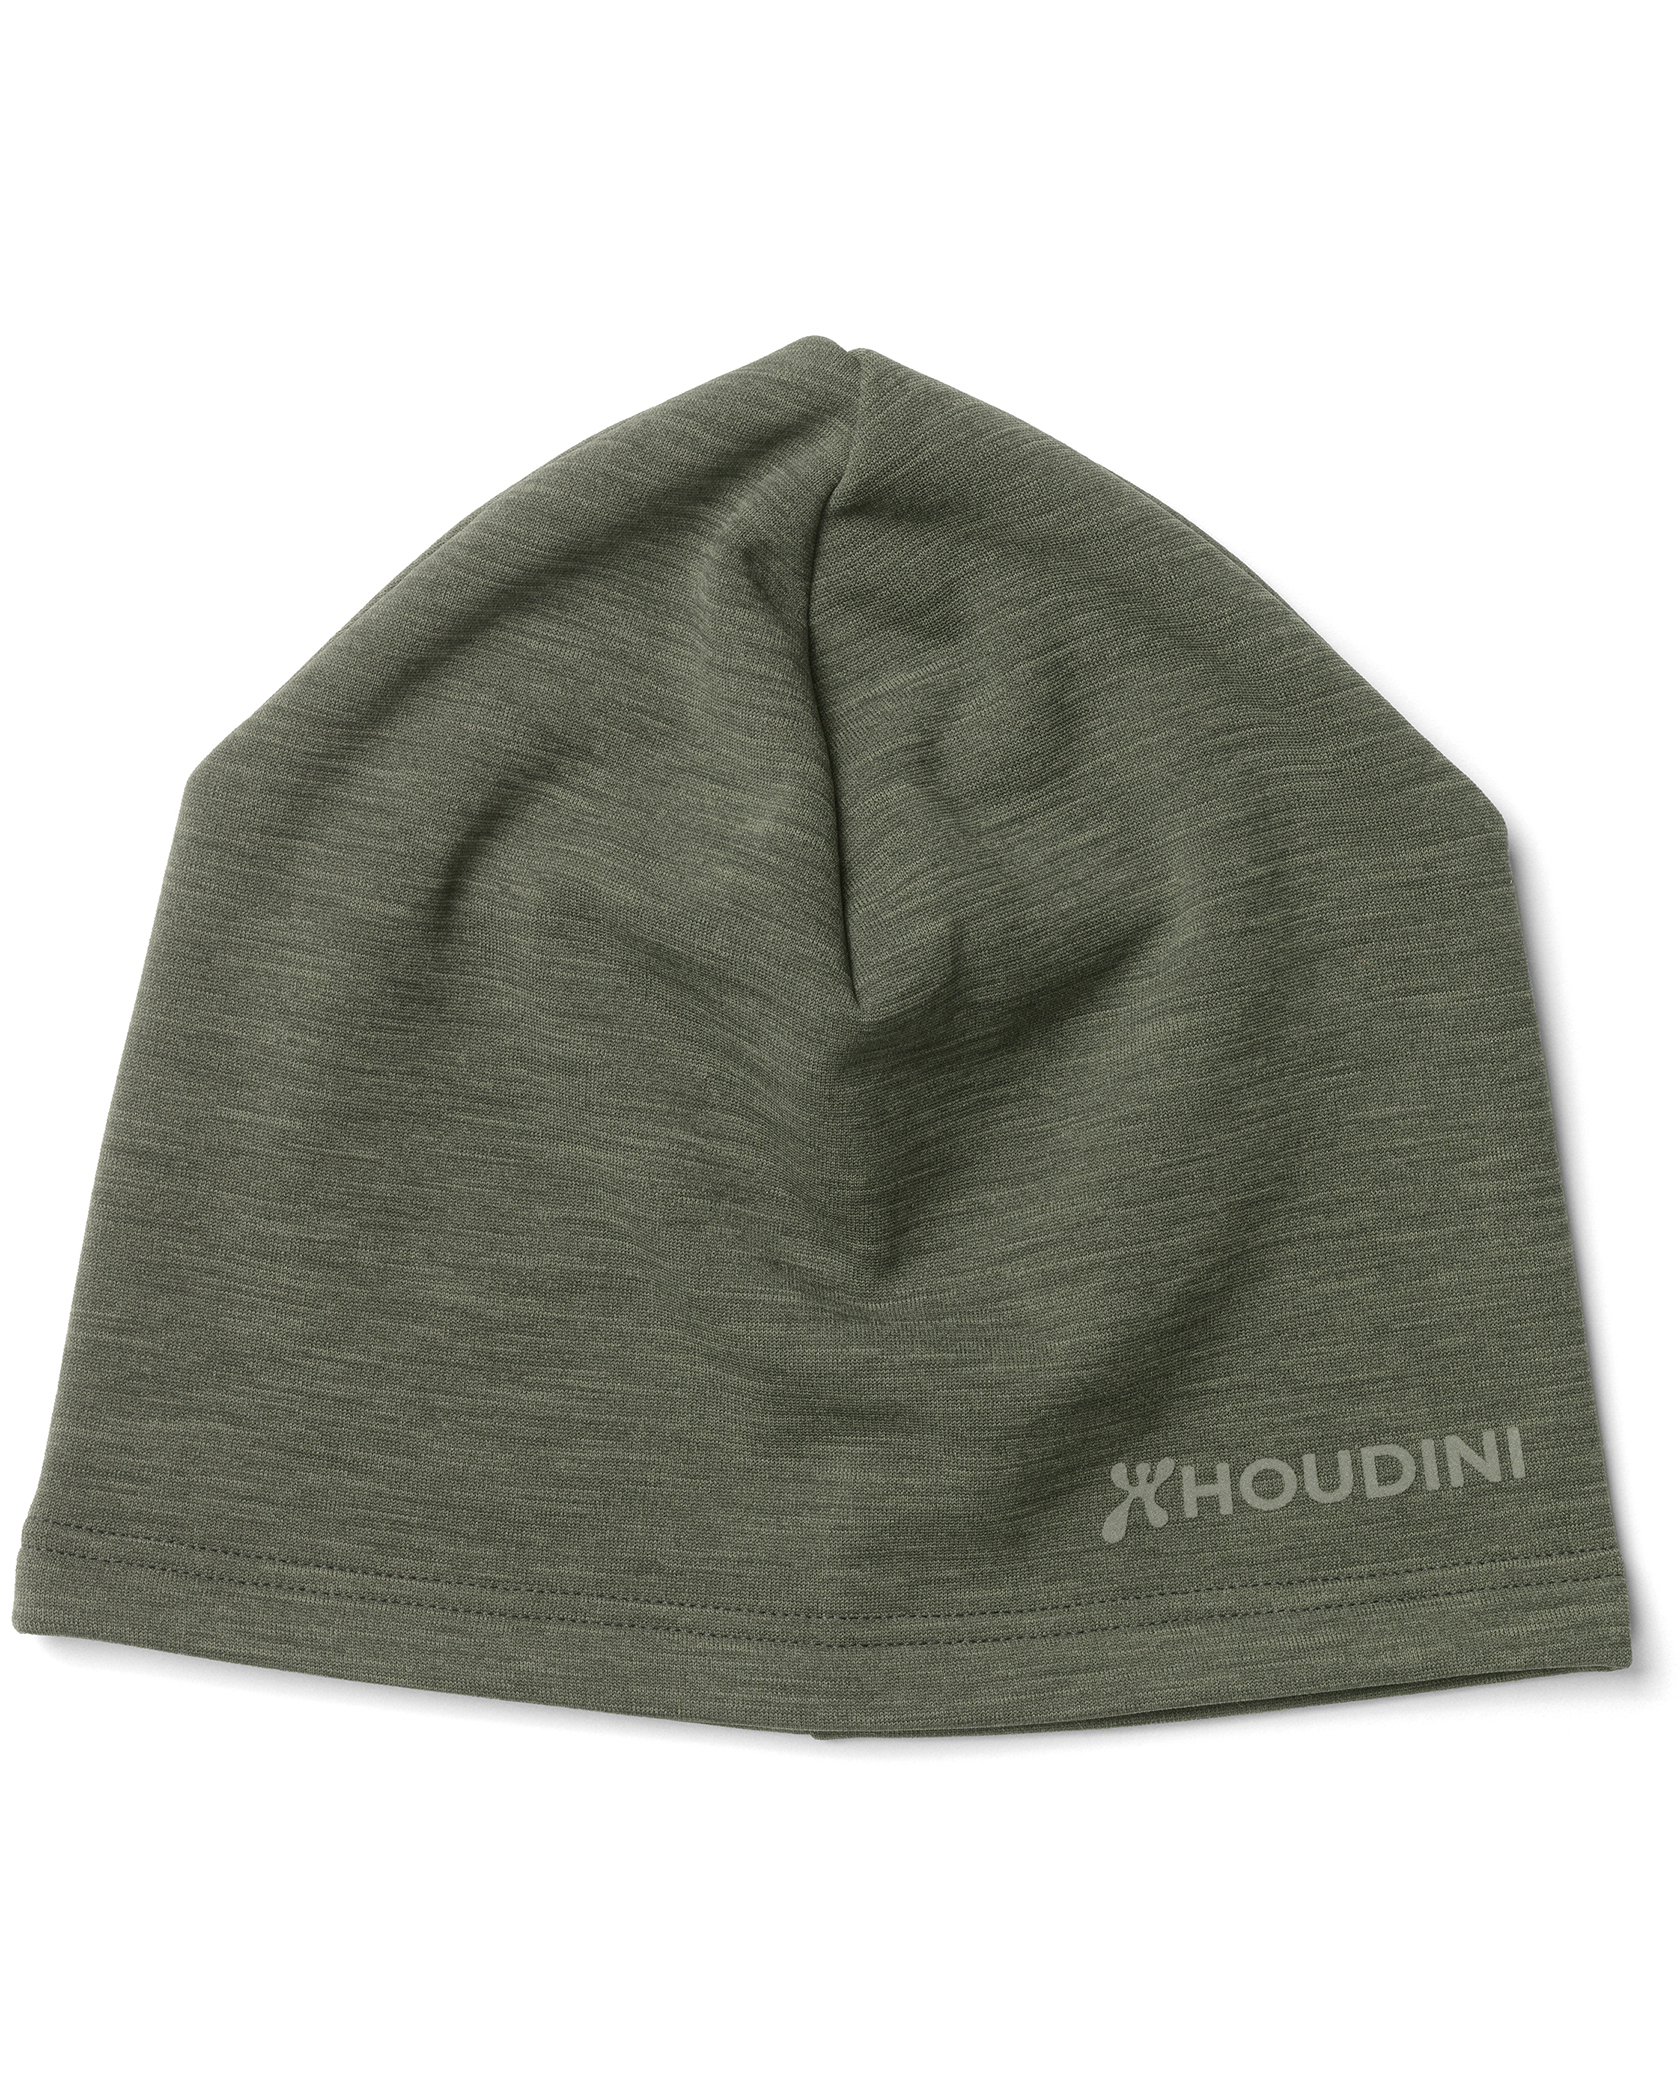 Houdini Outright Hat Light Willow Green (Storlek M)